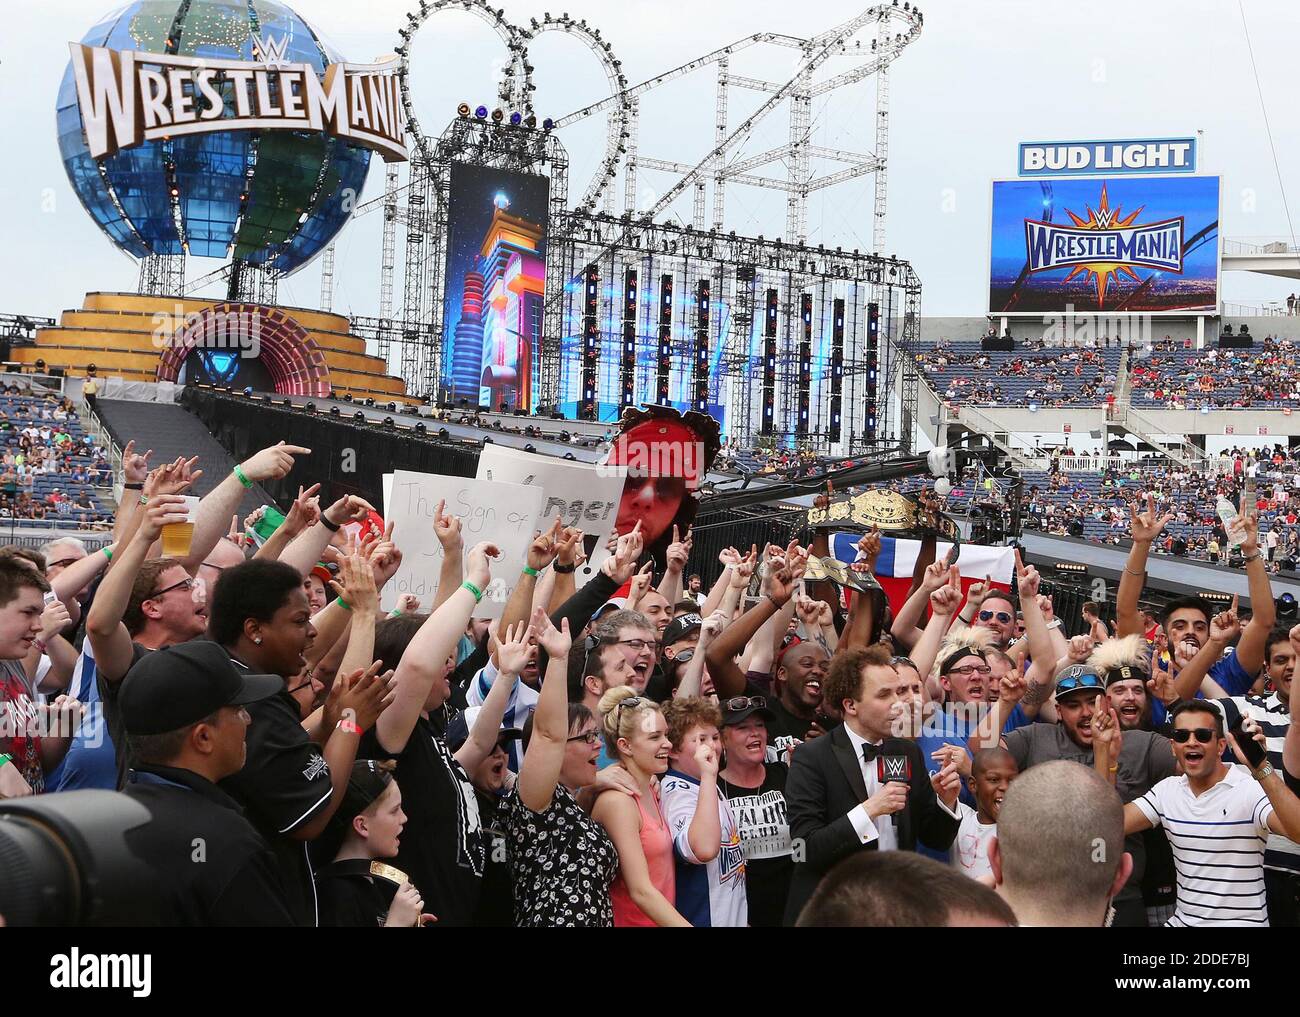 NO FILM, NO VIDEO, NO TV, NO DOCUMENTARY - Fans cheer during WrestleMania 33 on Sunday, April 2, 2017 at Camping World Stadium in Orlando, FL, USA. Photo by Stephen M. Dowell/Orlando Sentinel/TNS/ABACAPRESS.COM Stock Photo